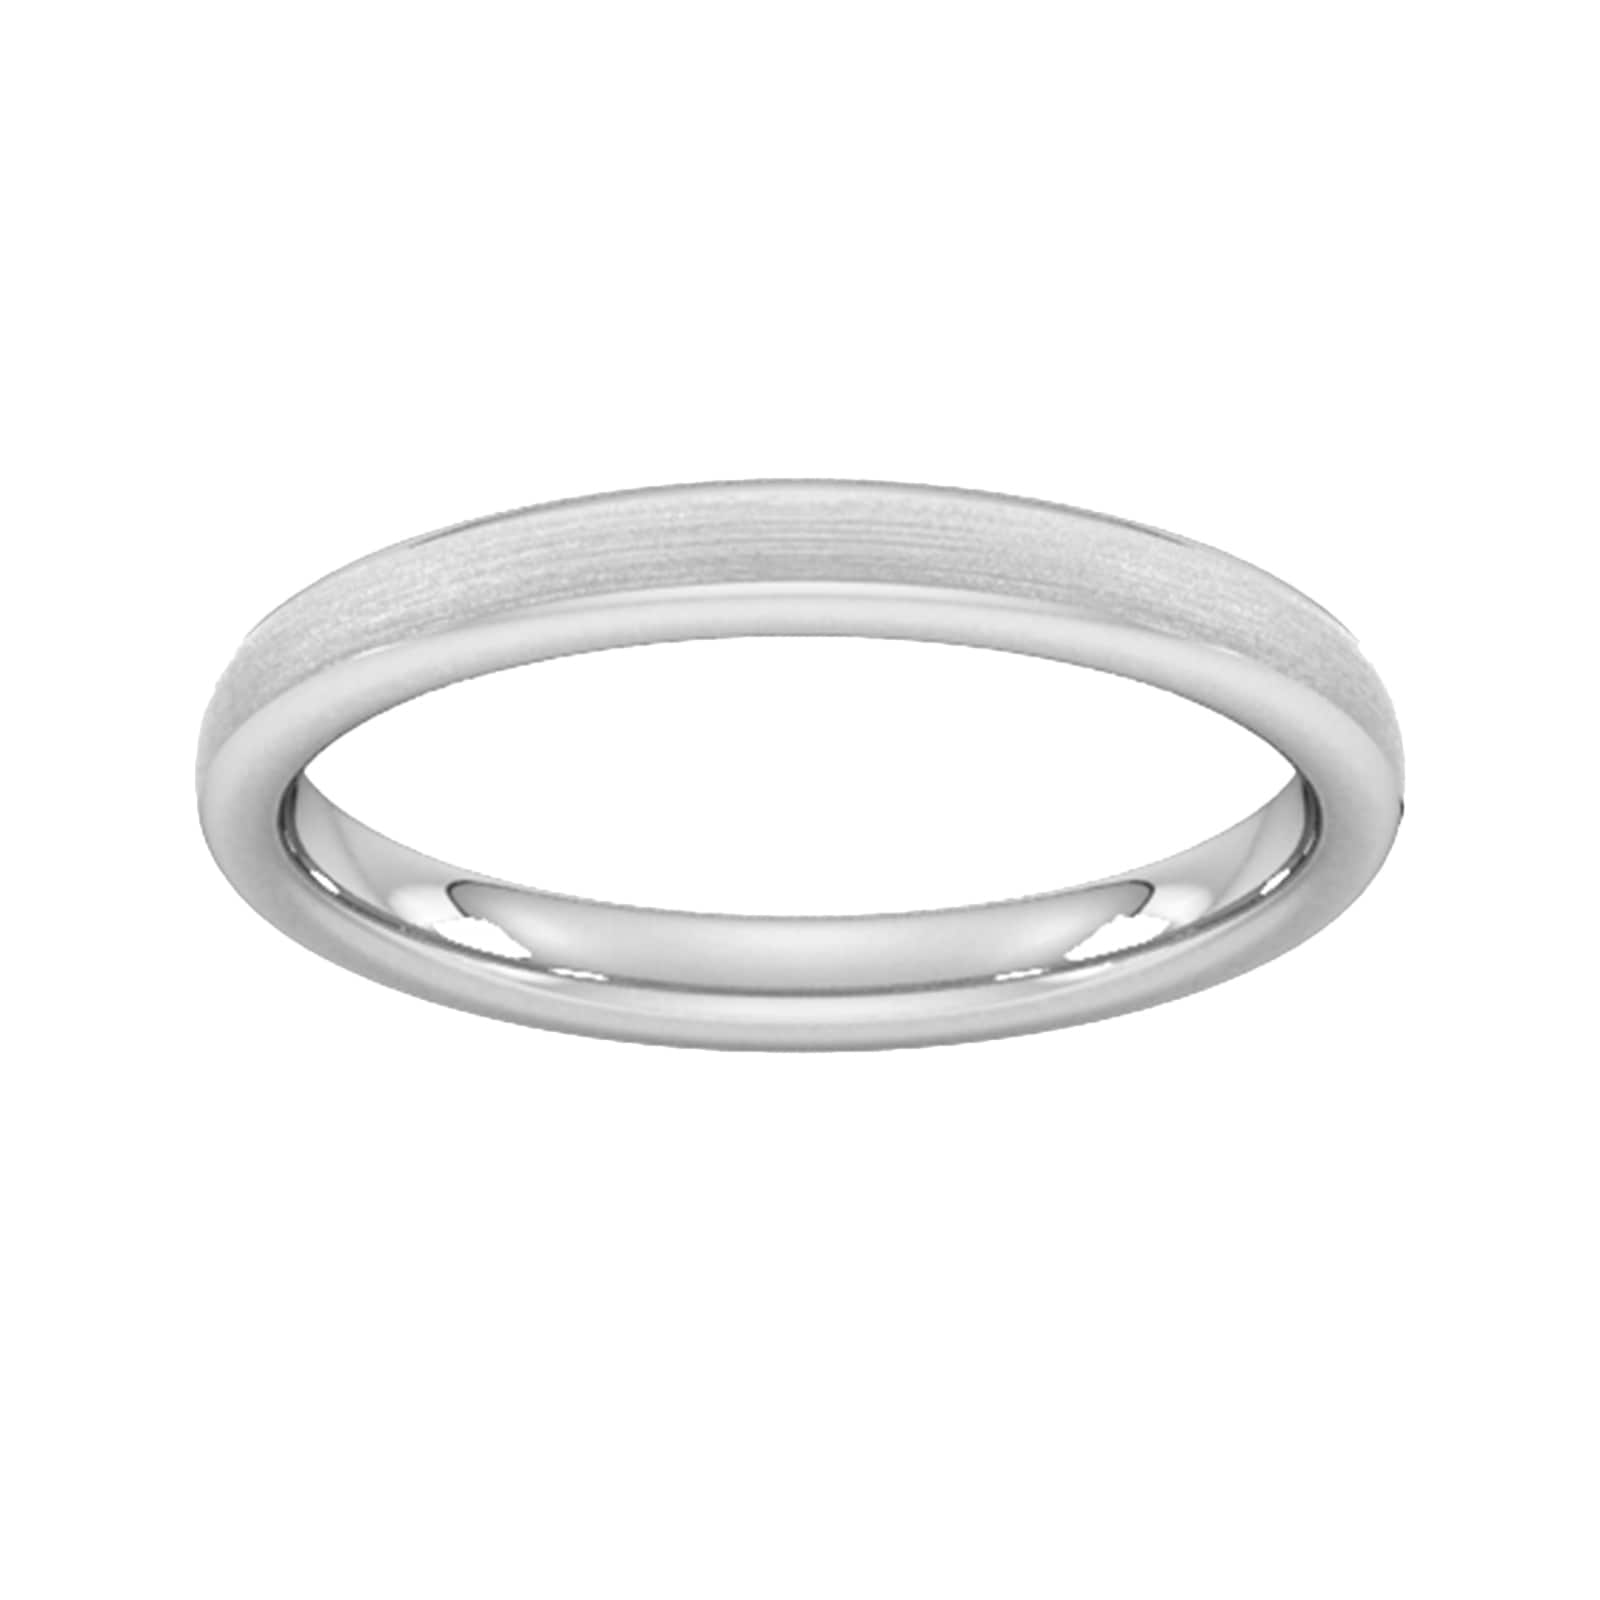 2.5mm D Shape Heavy Matt Finished Wedding Ring In Platinum - Ring Size Q